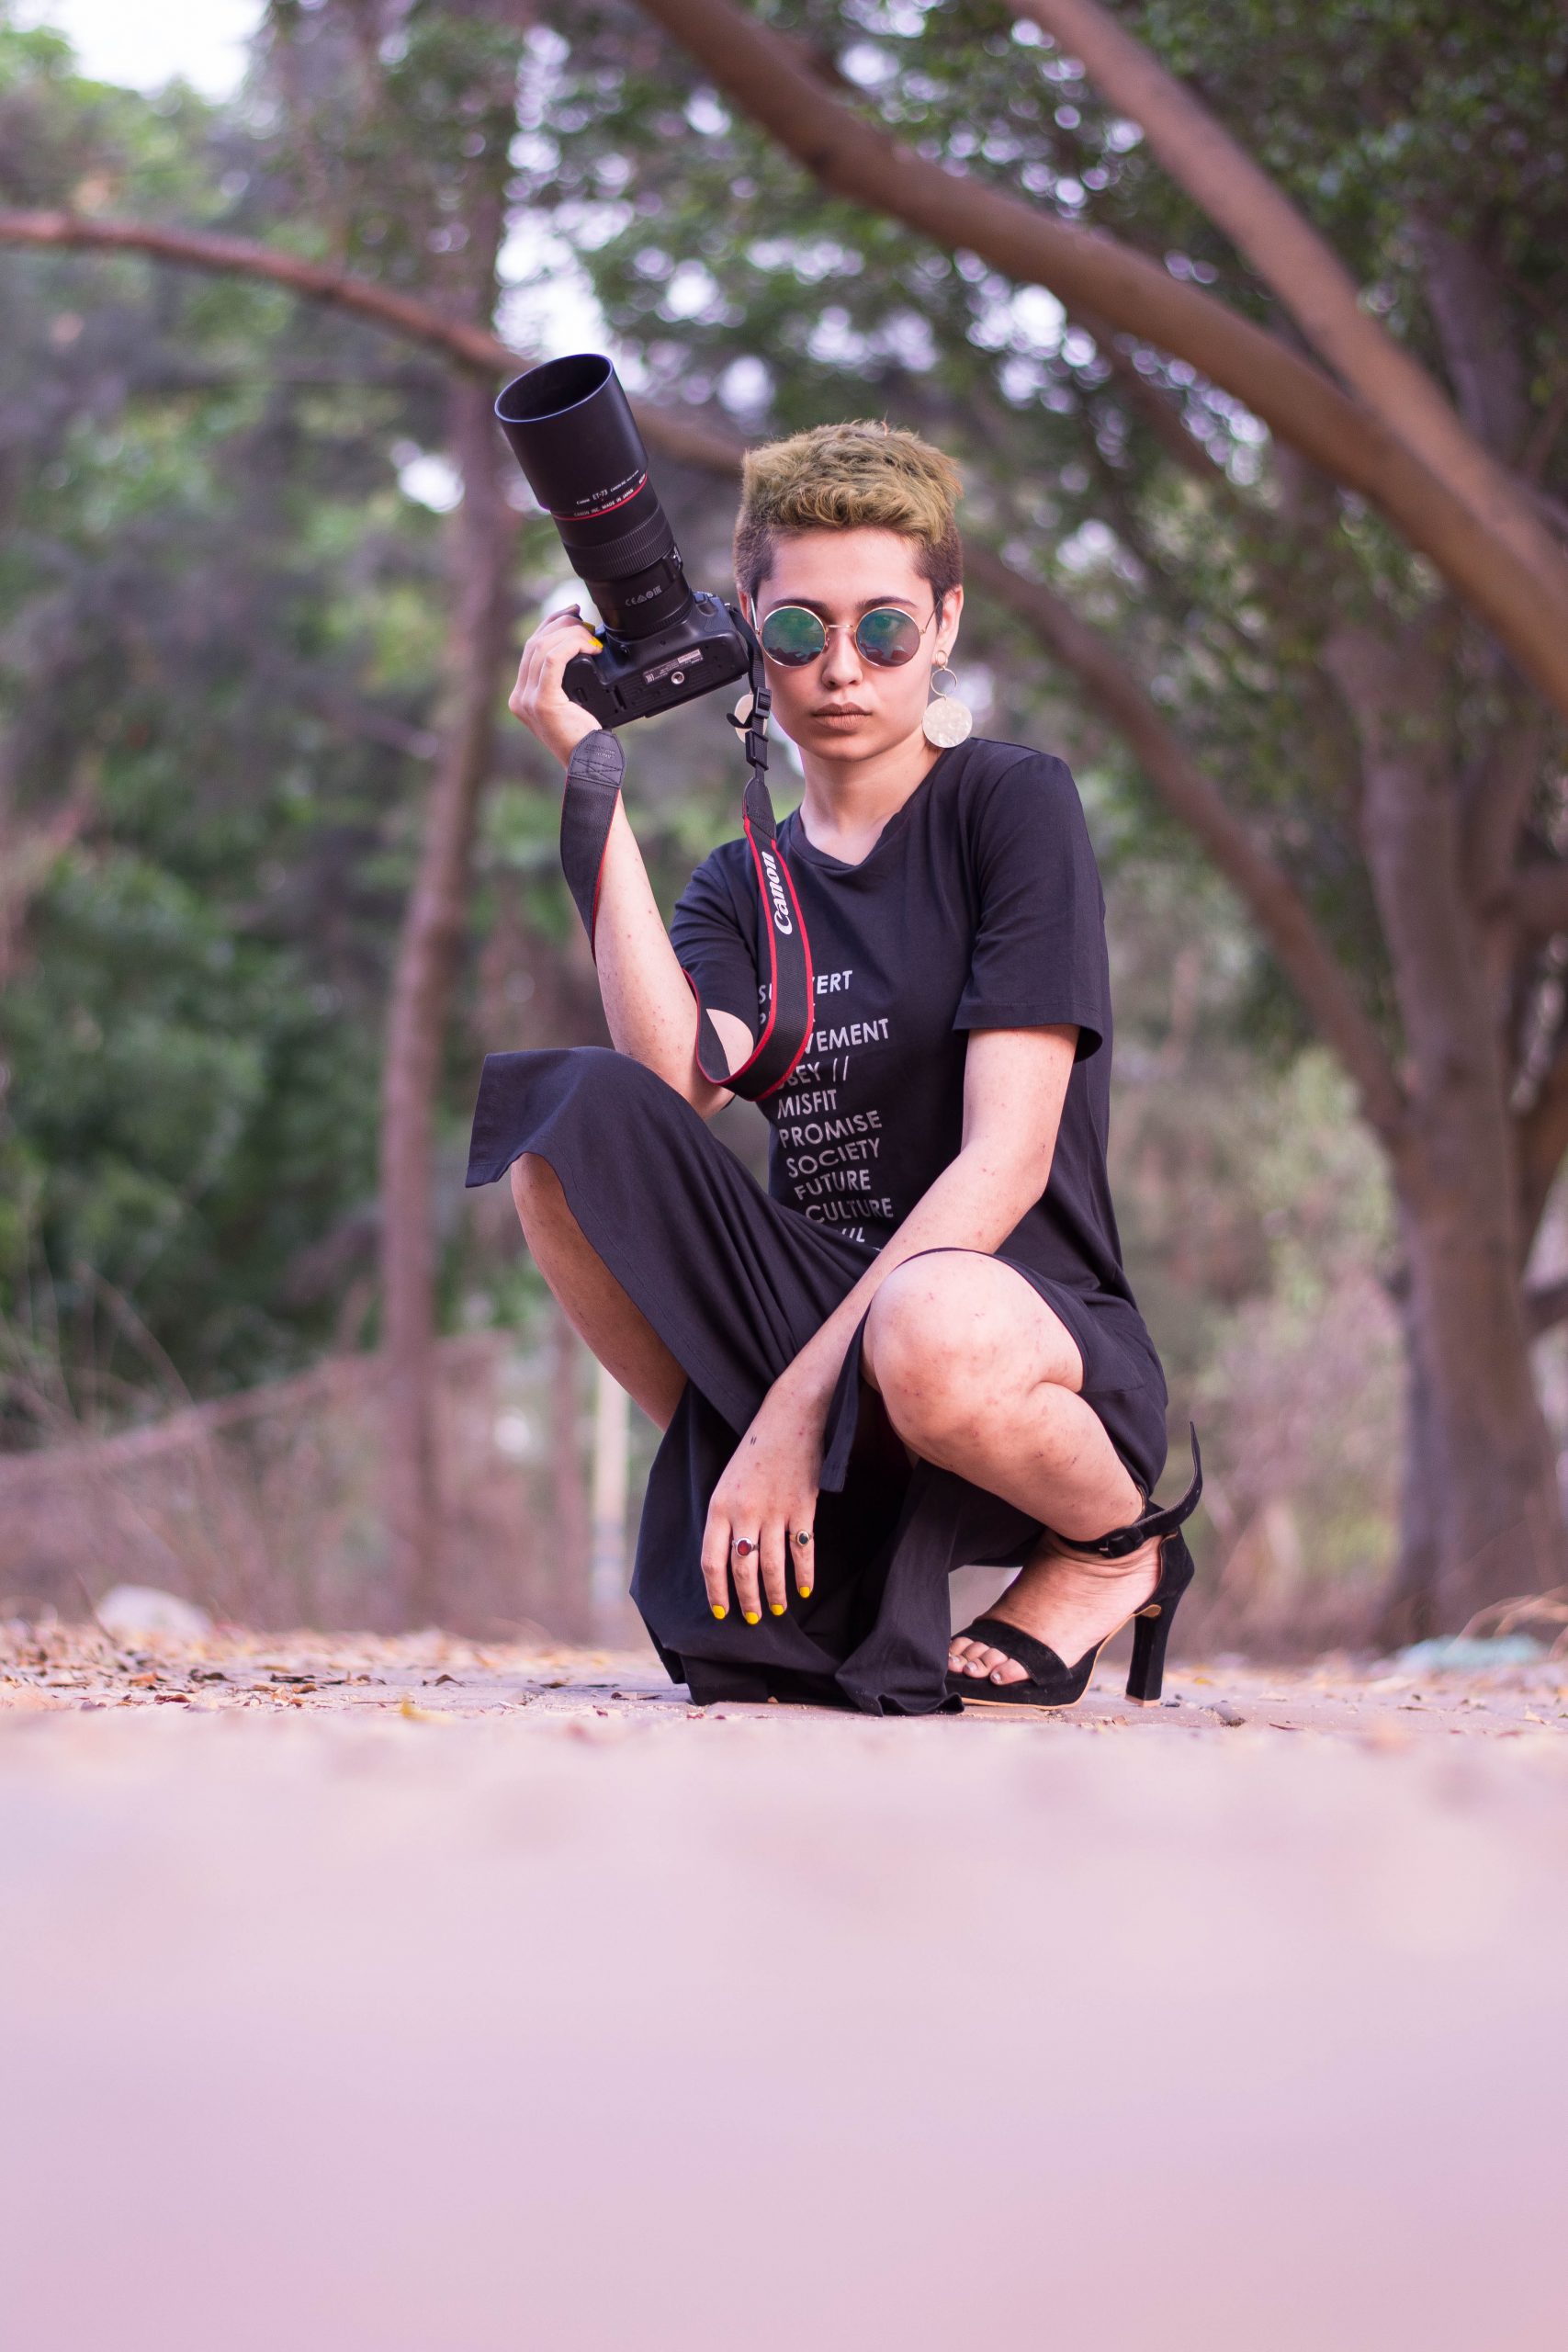 A female photographer